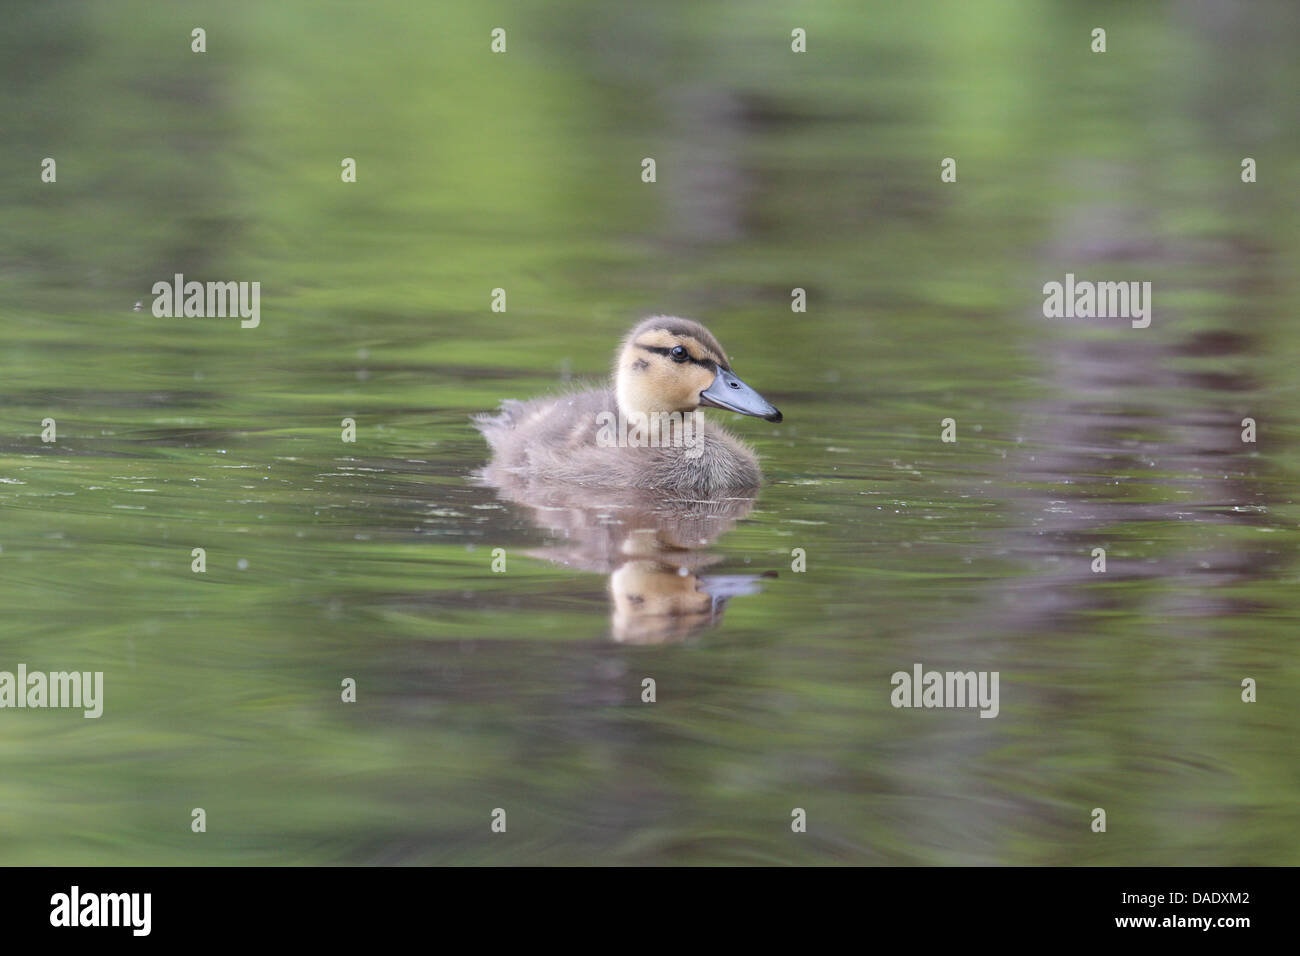 Small Mallard duck, blurred background Stock Photo